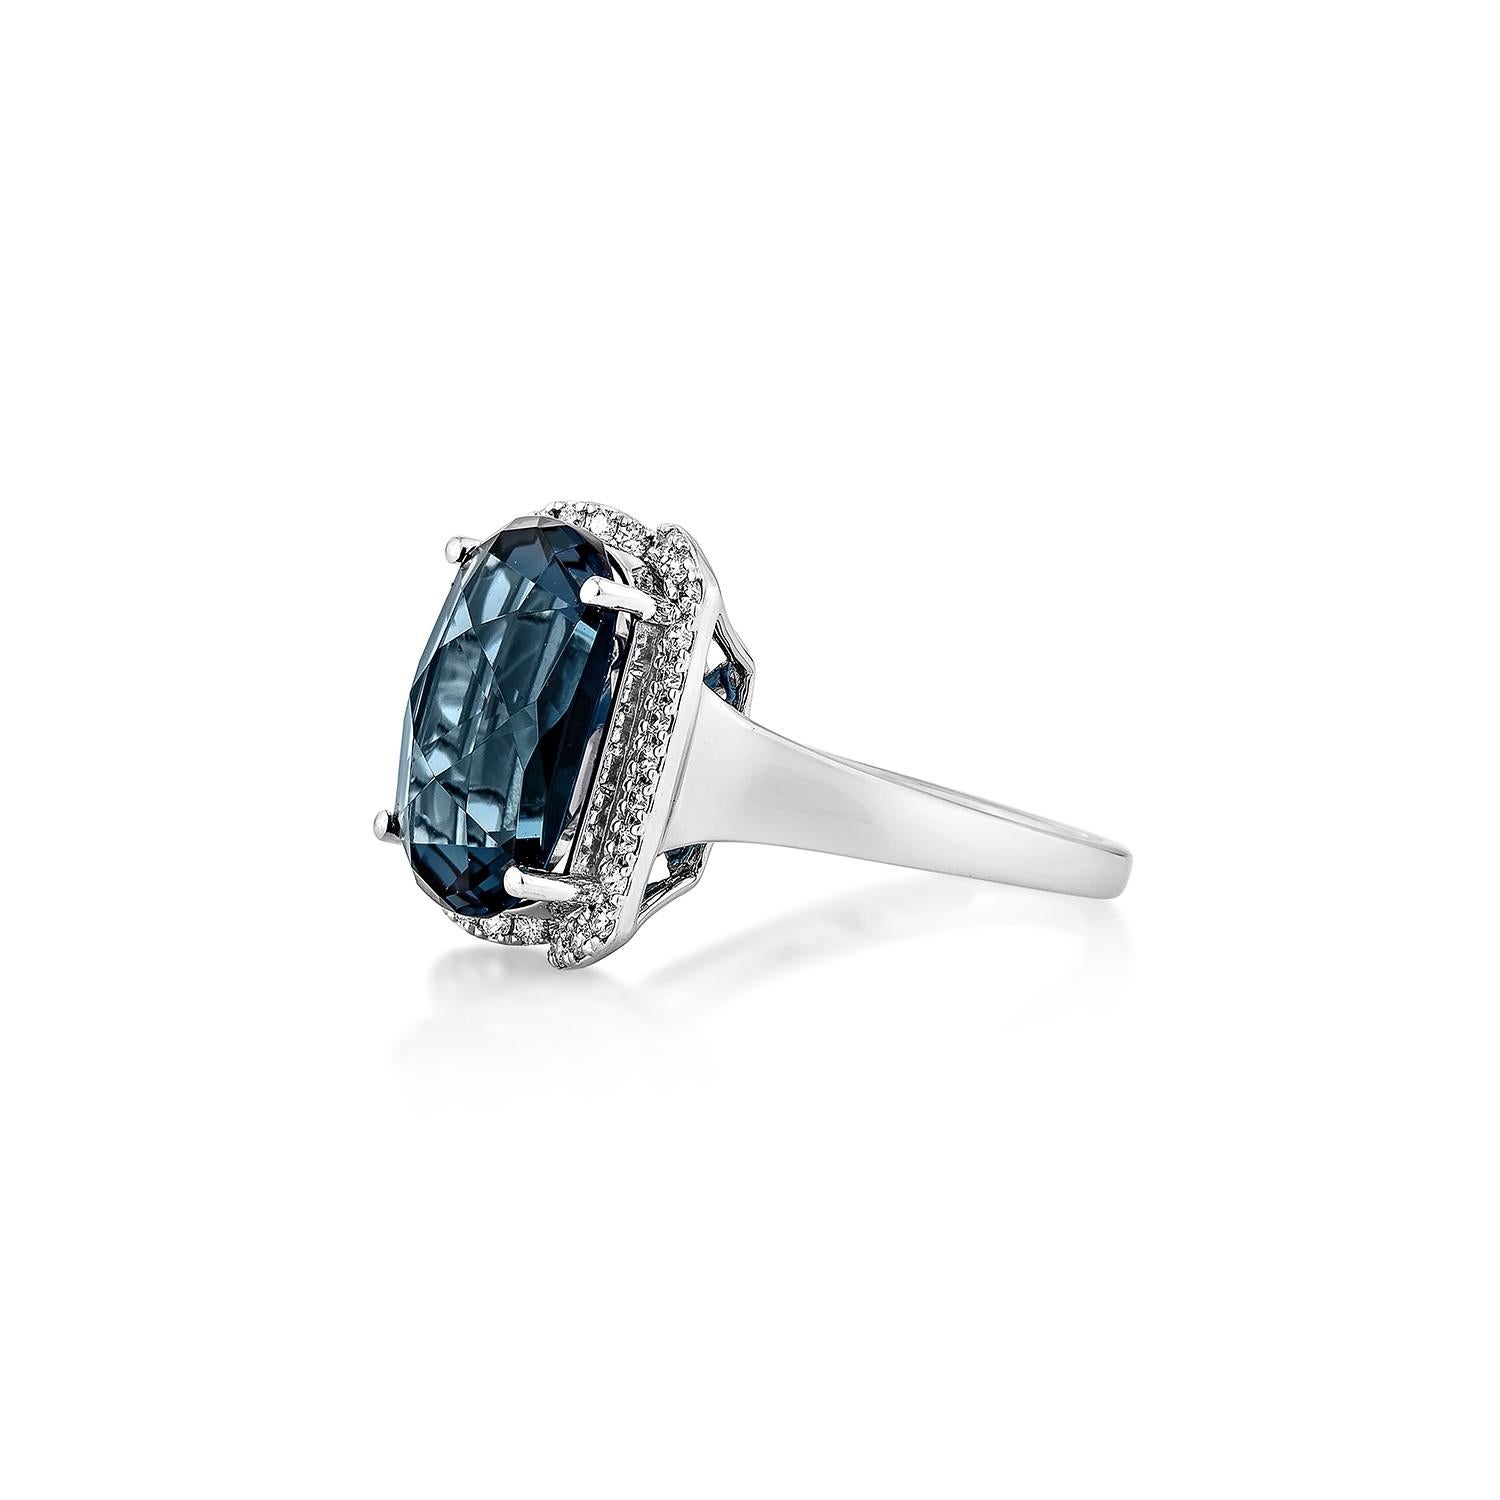 Oval Cut 8.04 Carat London Blue Topaz Fancy Ring in 18Karat White Gold with Diamond. For Sale